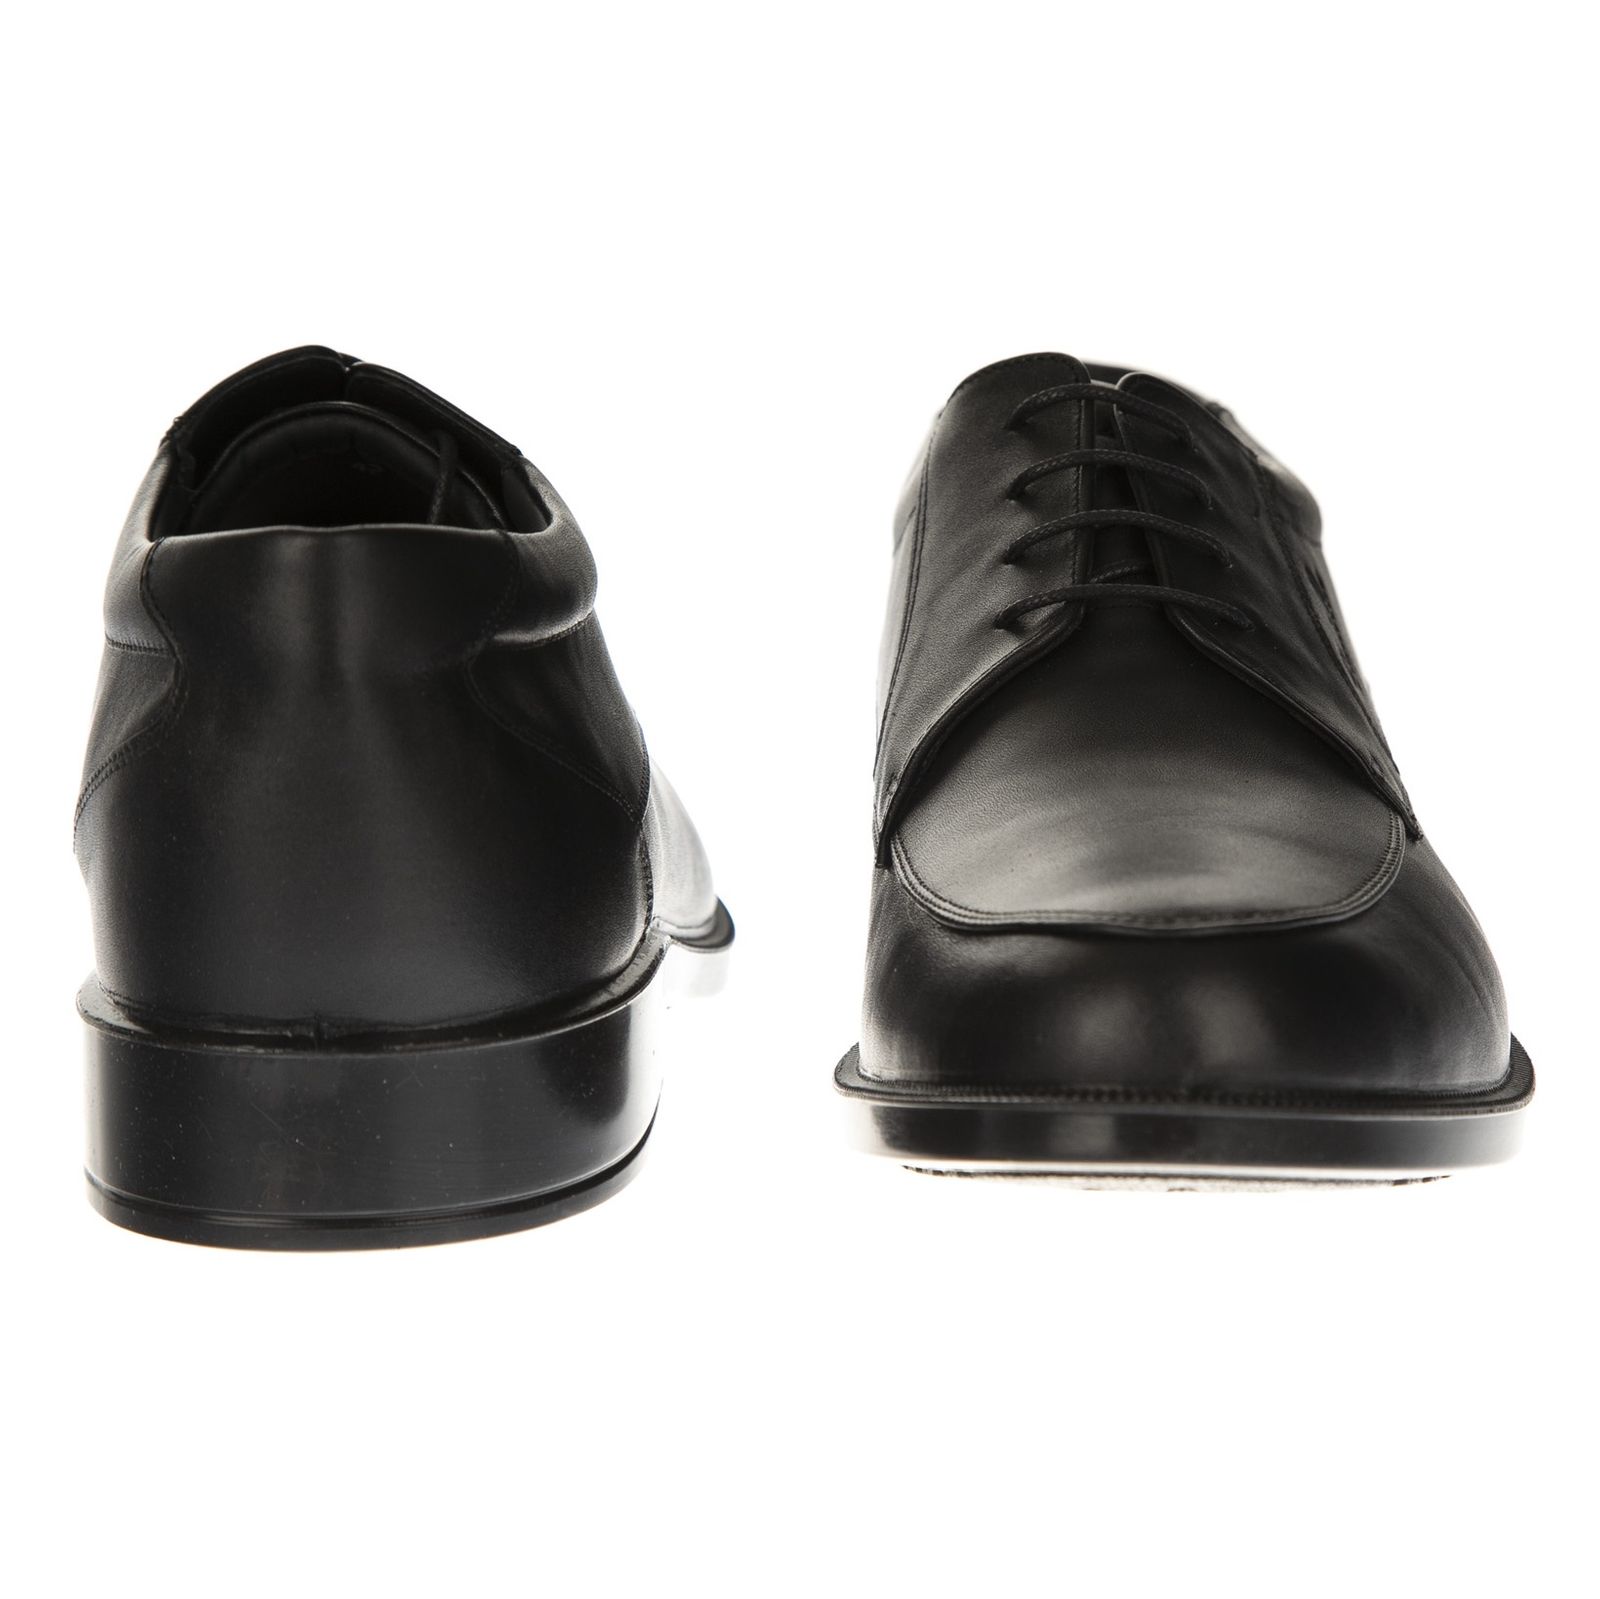 کفش مردانه دنیلی مدل 109070221001 -  - 7